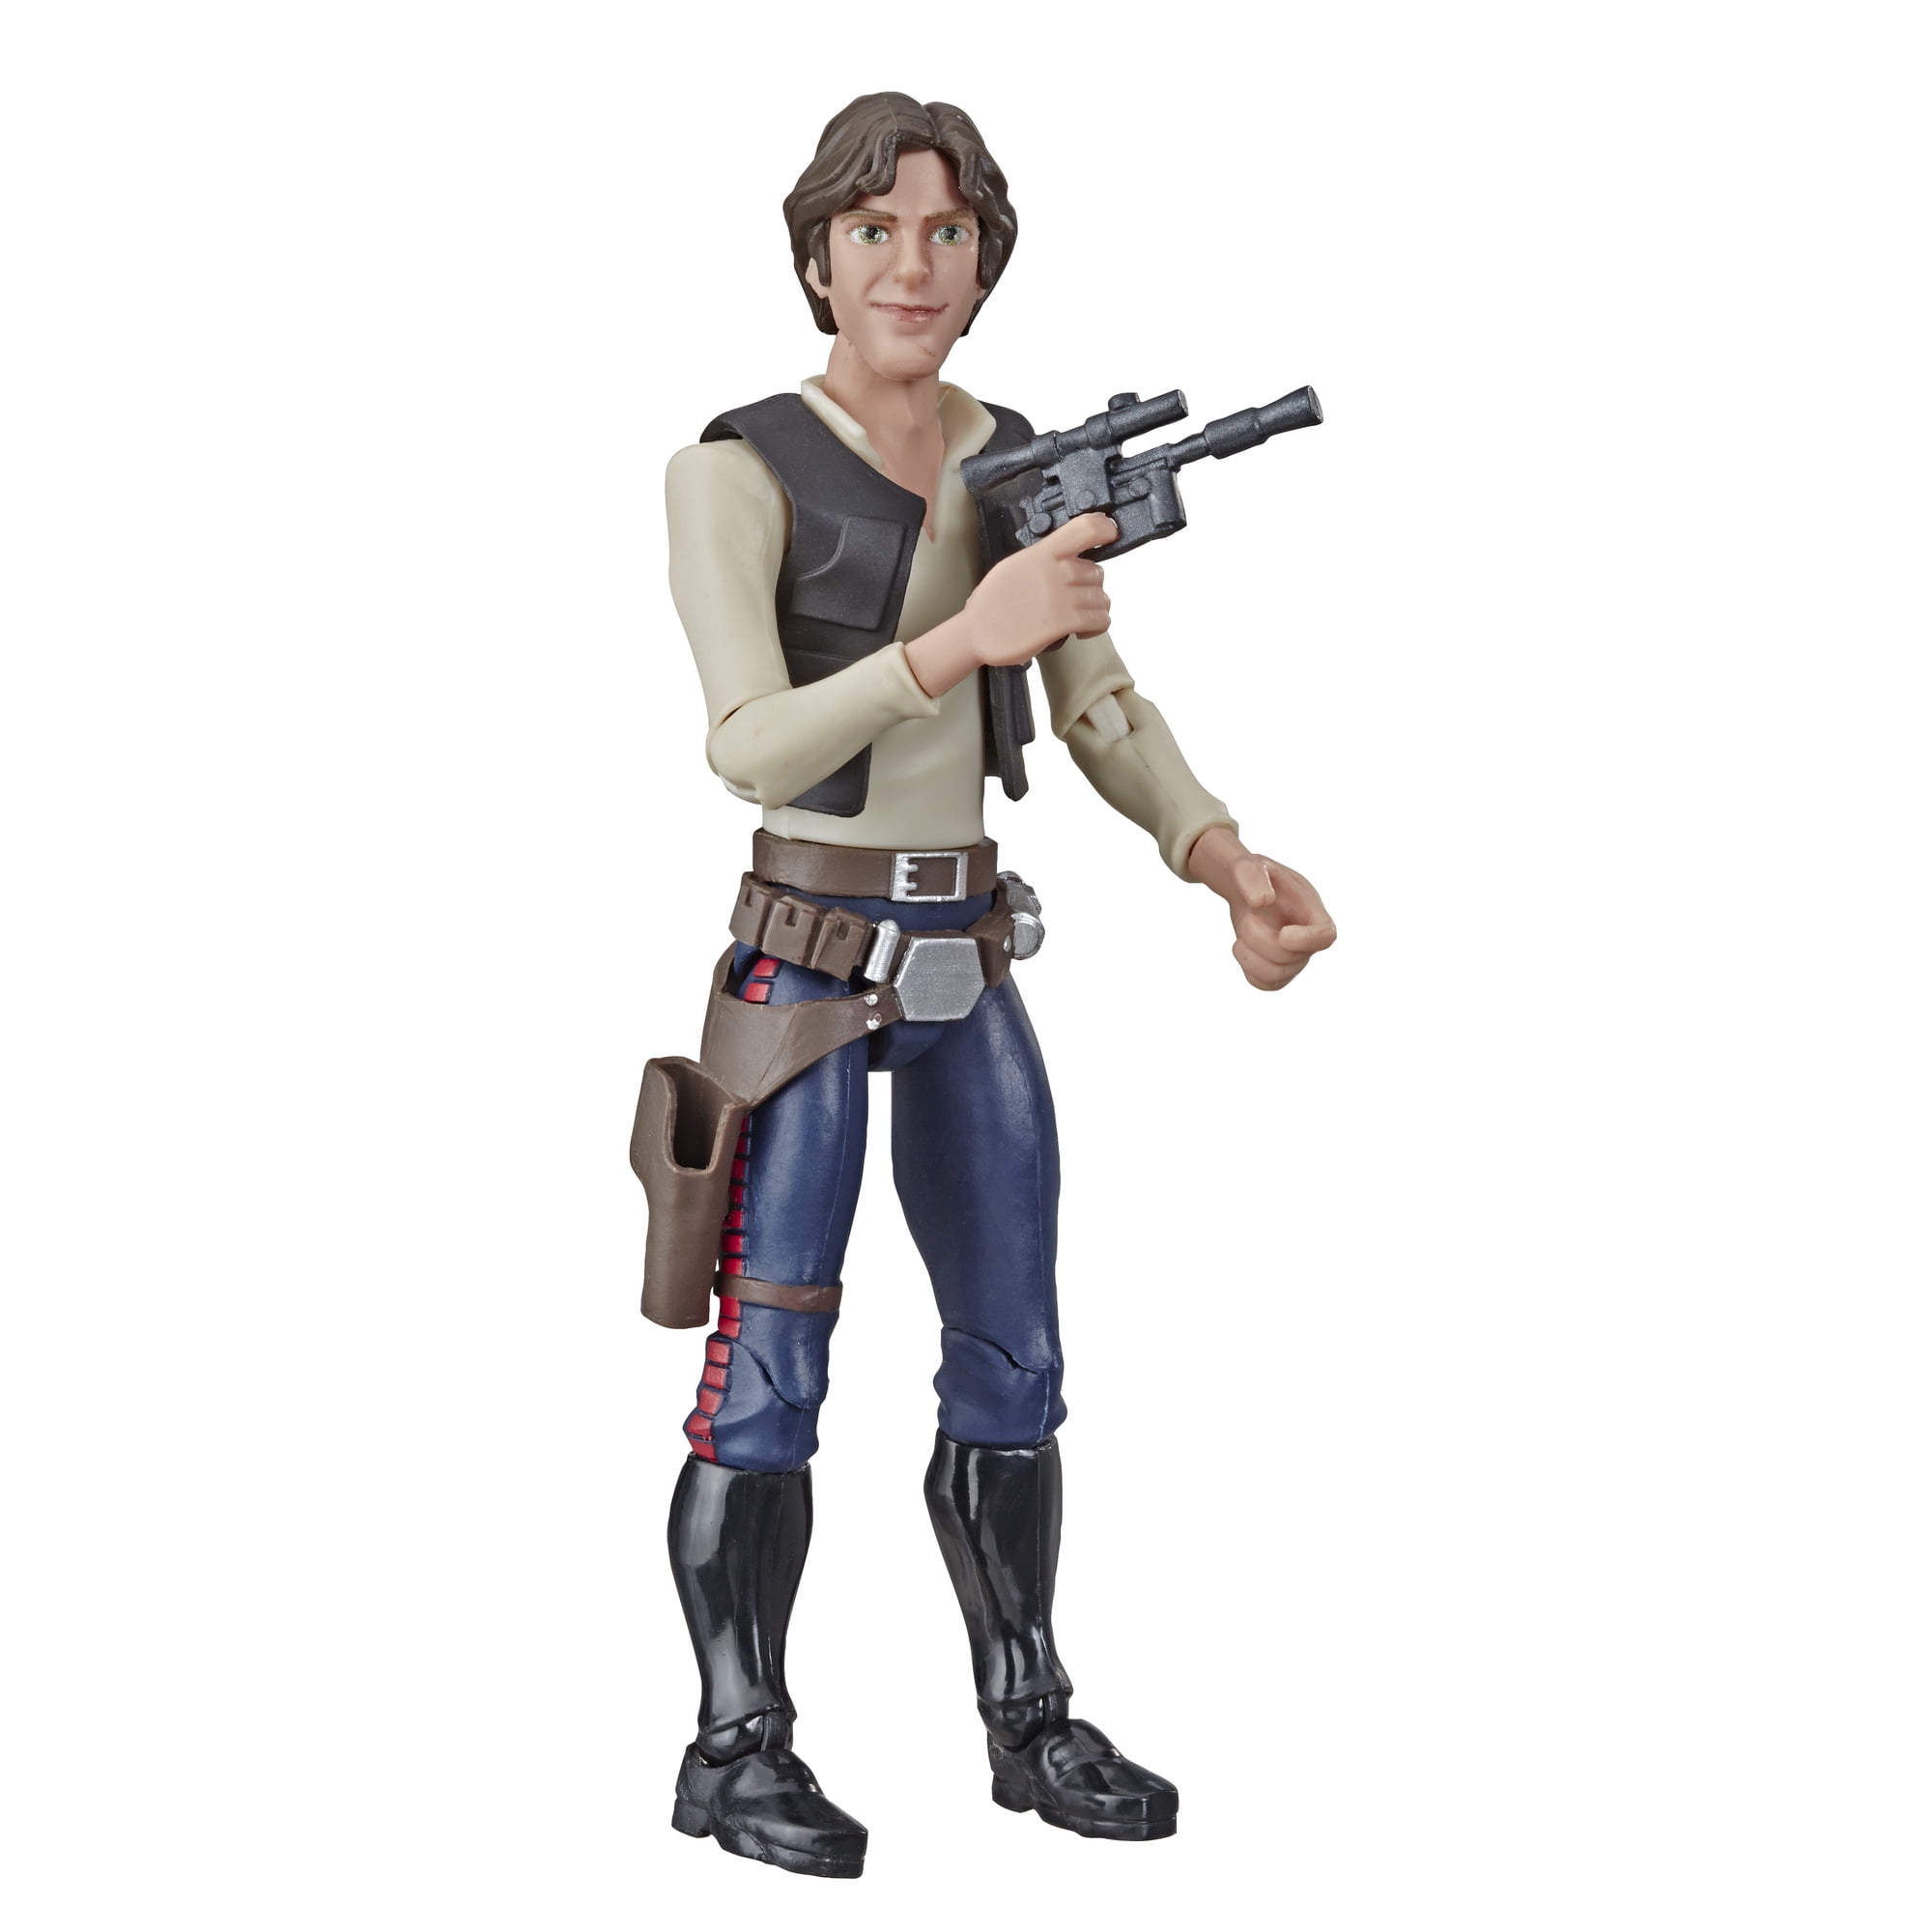 Hasbro Star Wars Galaxy of Adventures Luke Skywalker Figure and Comic E5650 for sale online 